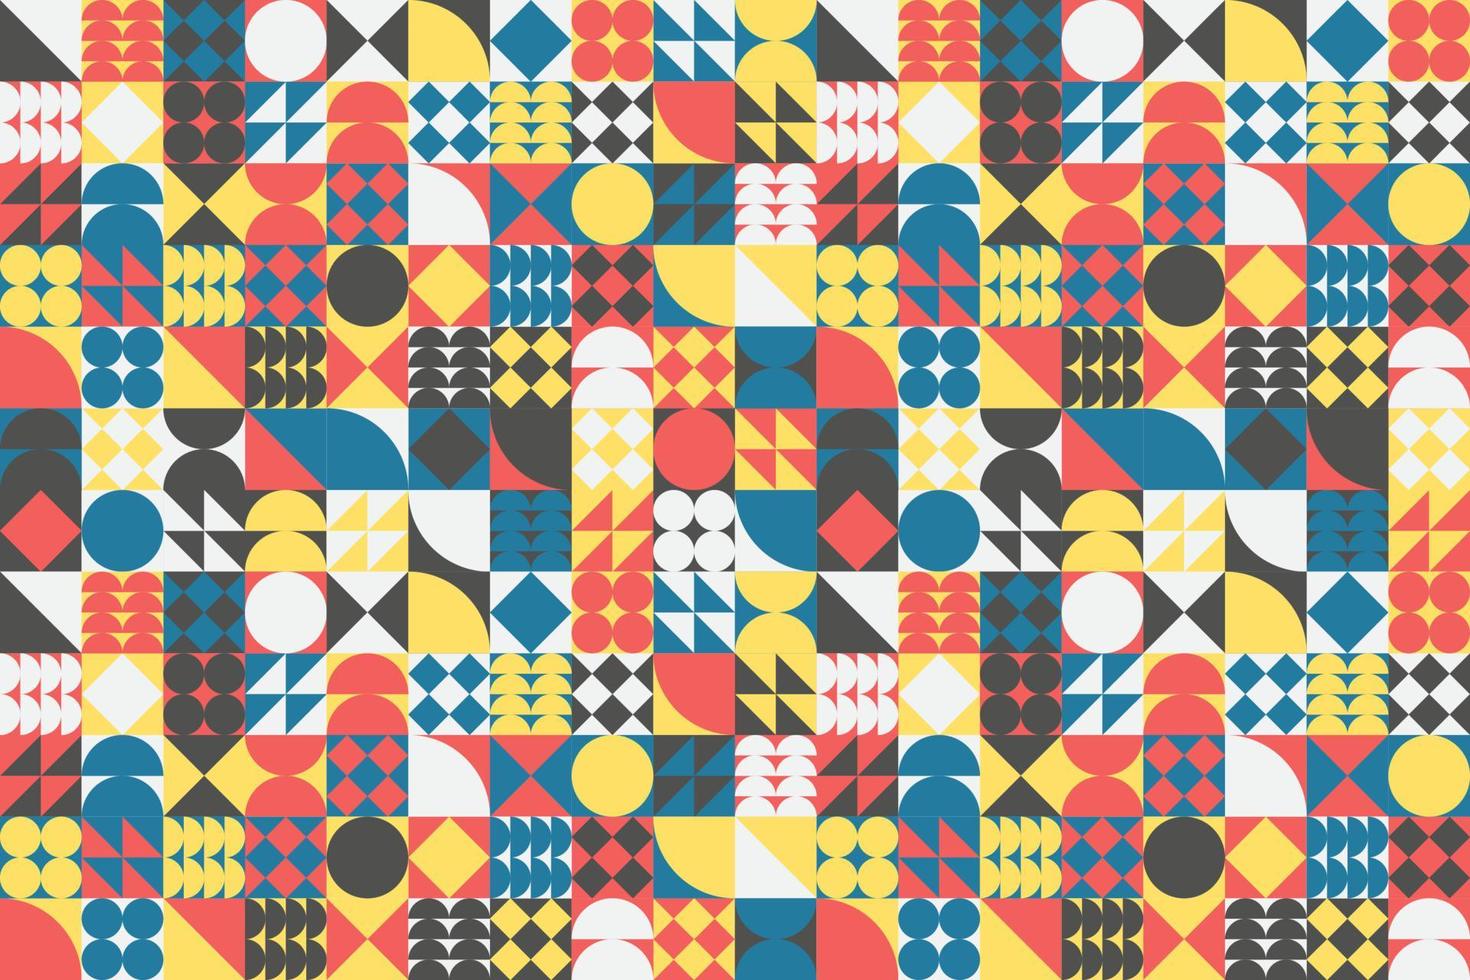 Colorful geometric shape mosaic pattern background vector